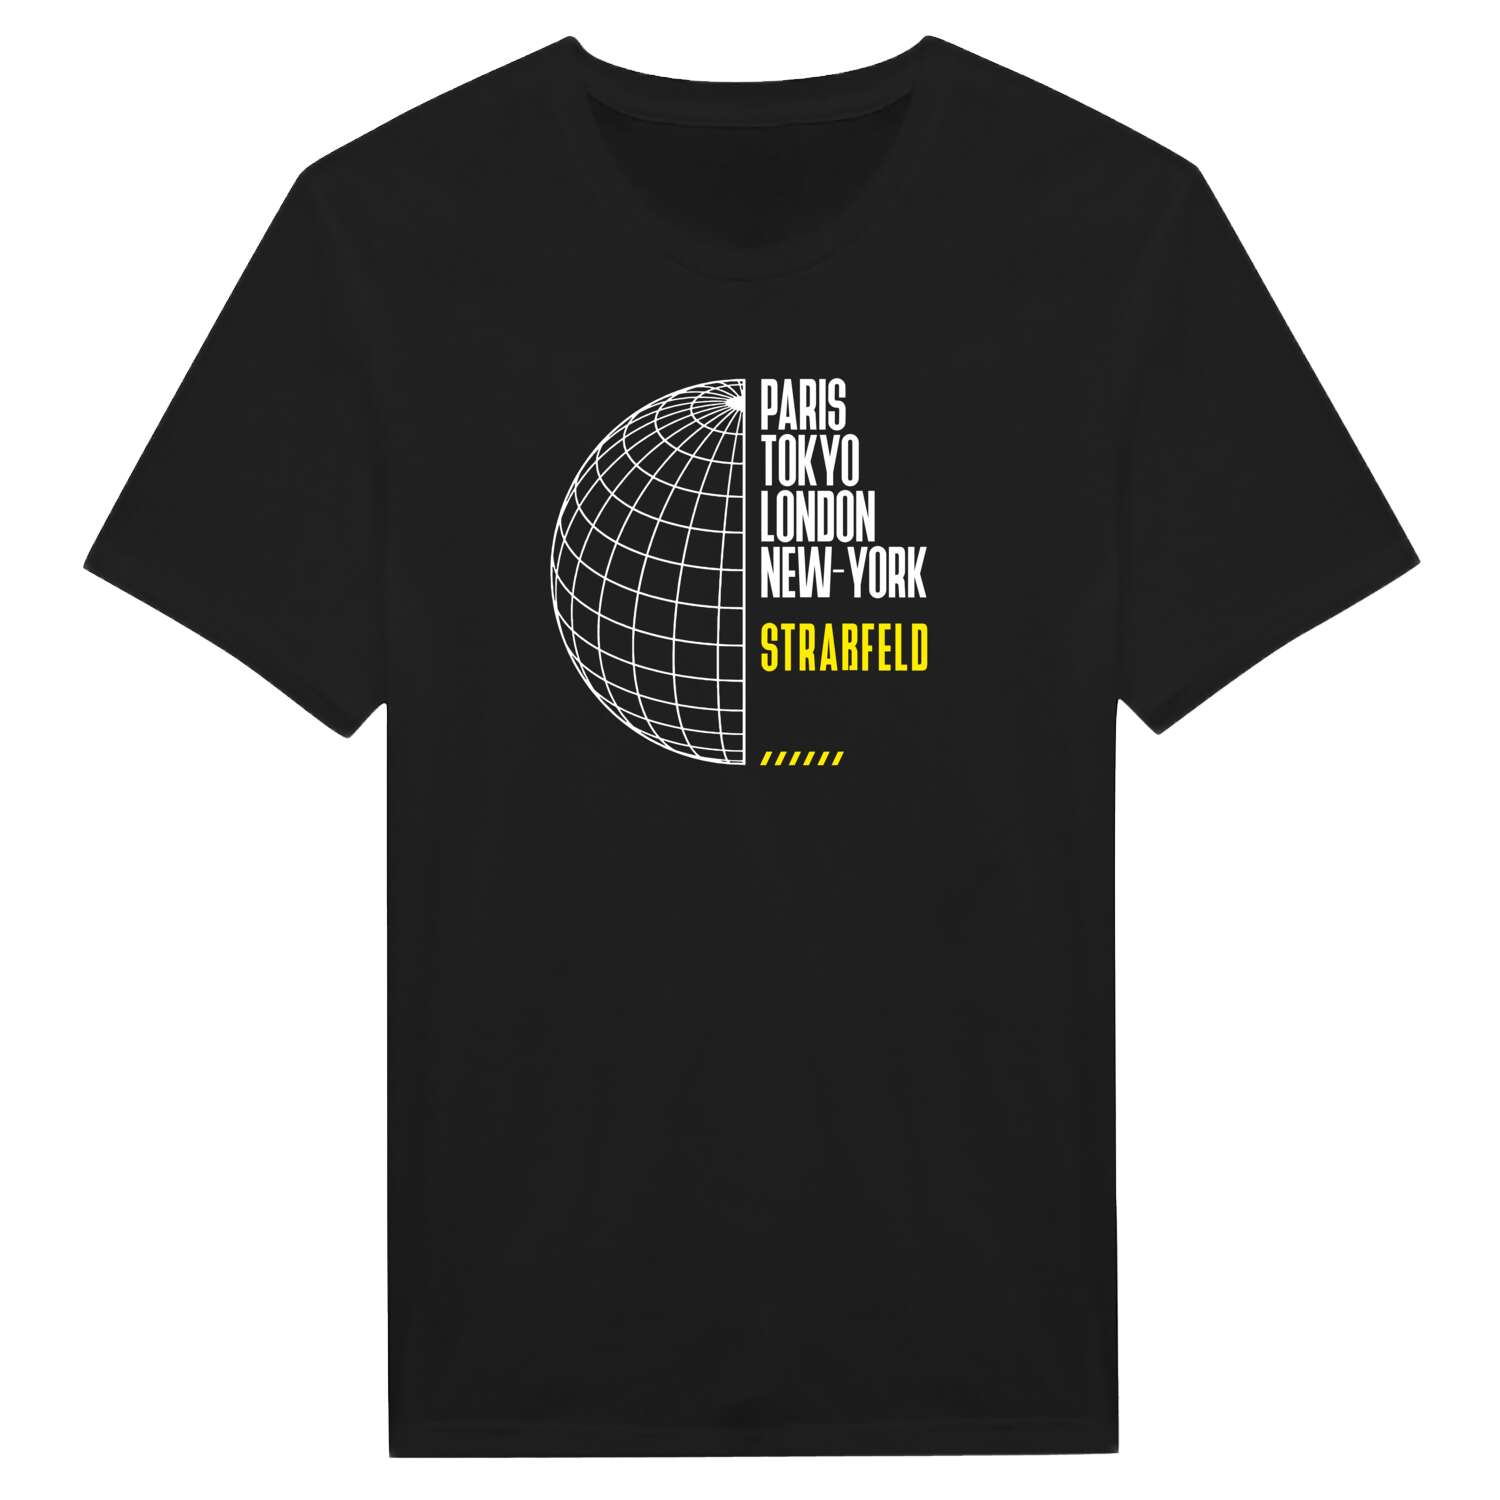 Straßfeld T-Shirt »Paris Tokyo London«